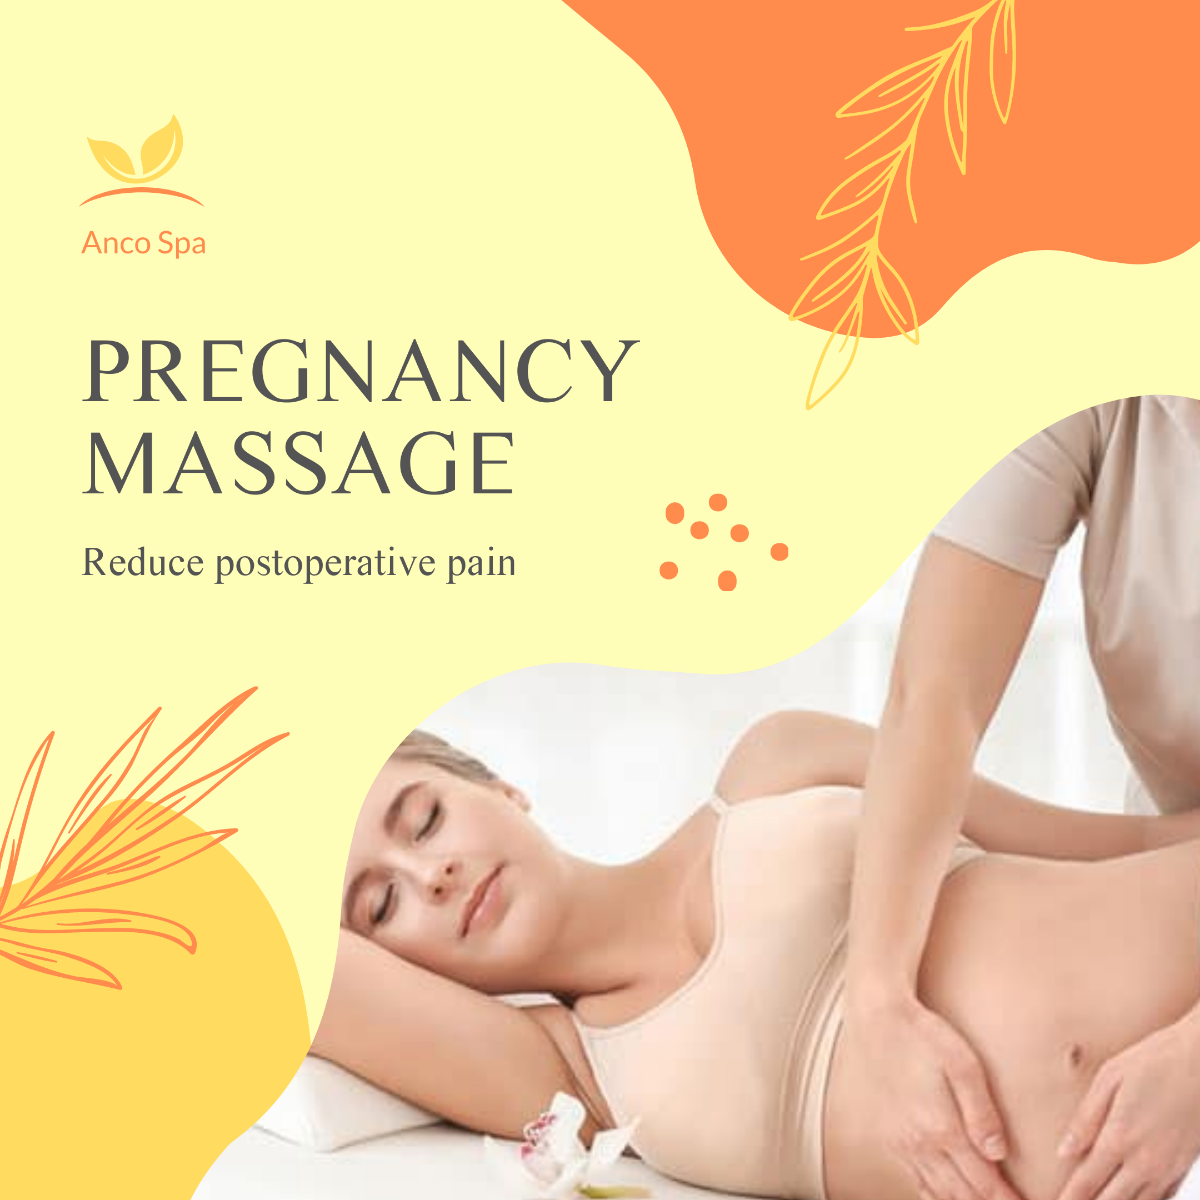 Pregnancy Massage Post, Facebook, Instagram Template